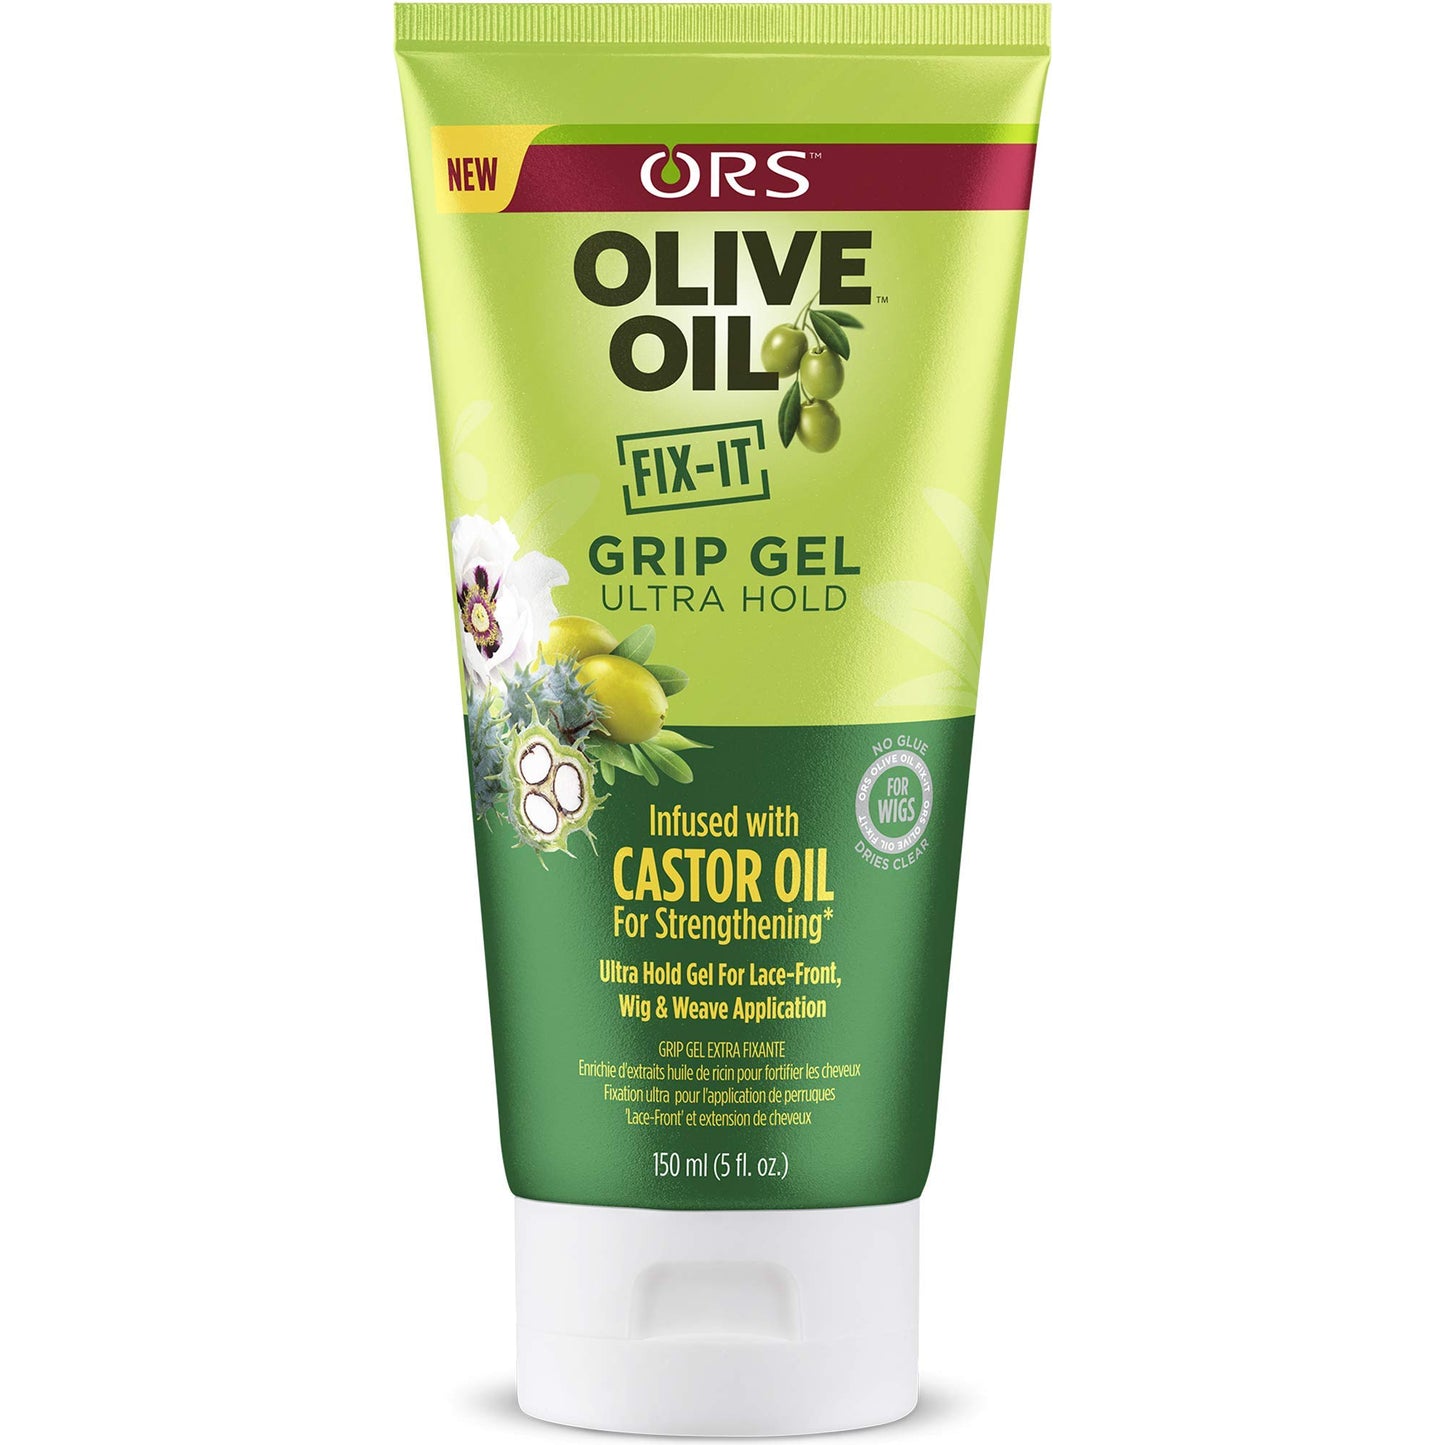 ORS Olive Oil Fixit Grip Gel Ultra 5oz